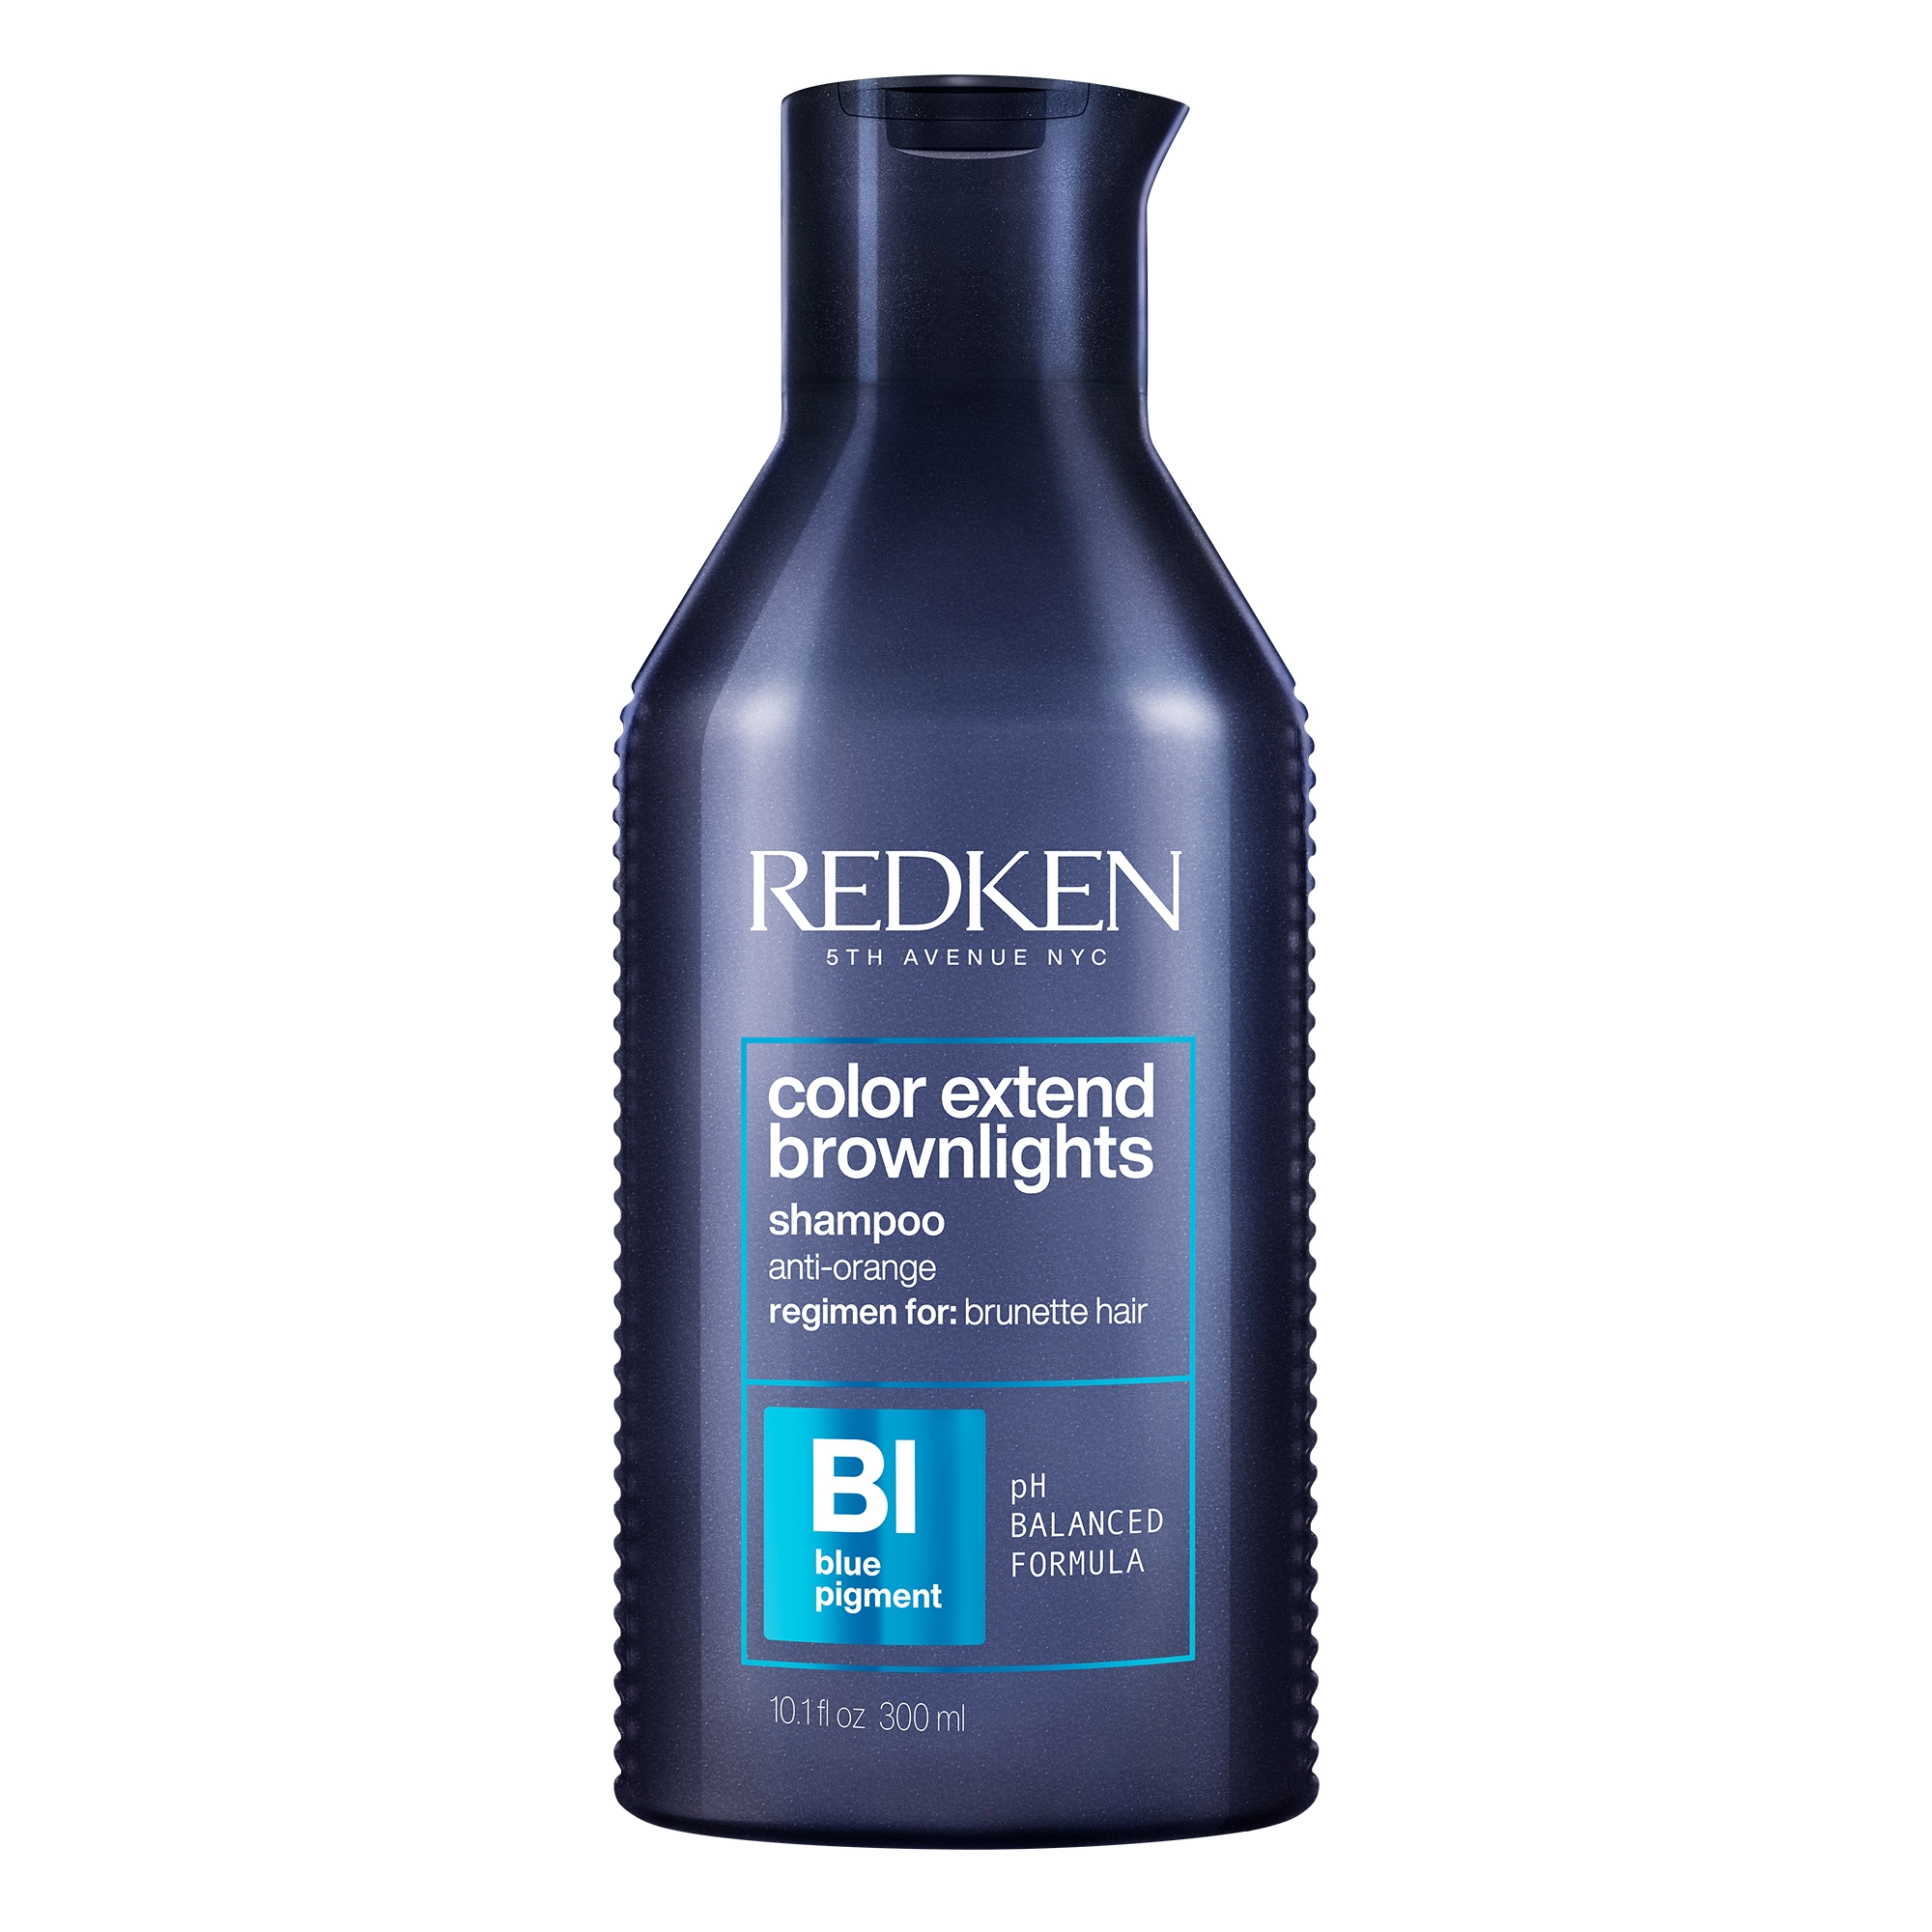 Redken 2020 Color Extend Brownlights Shampoo Product Shot 2000x2000 1 jpg